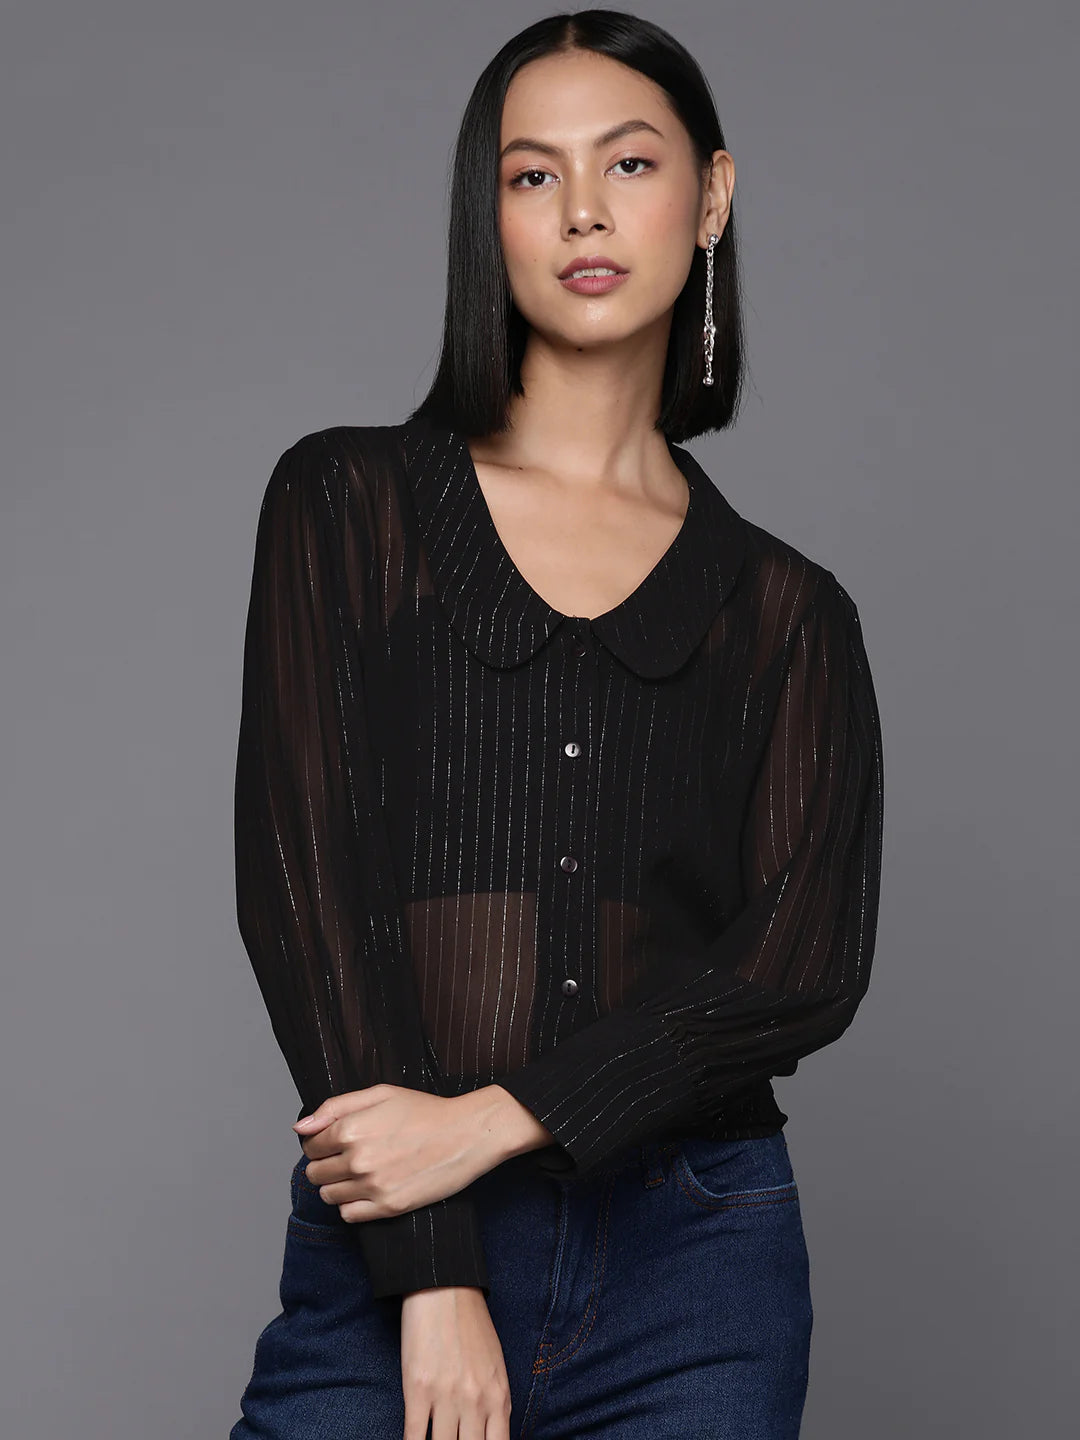 Black Long Sleeves Shirt for Women | Dazzling Night Out Elegance Shirt